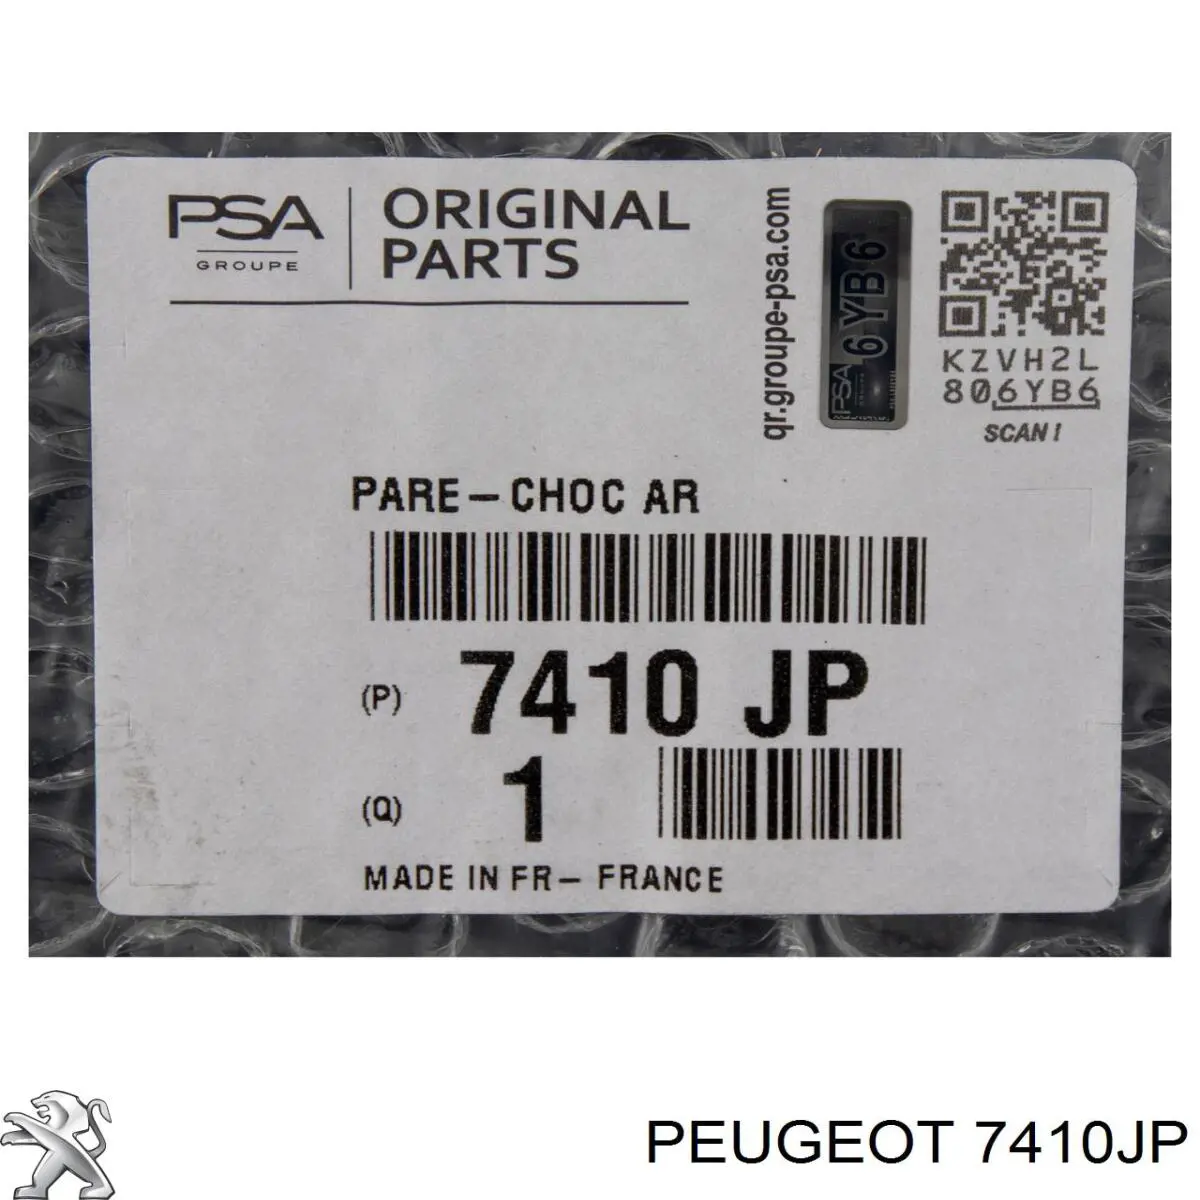 New original part! подробная инф. на нашем pro аккаунте на Peugeot 3008 